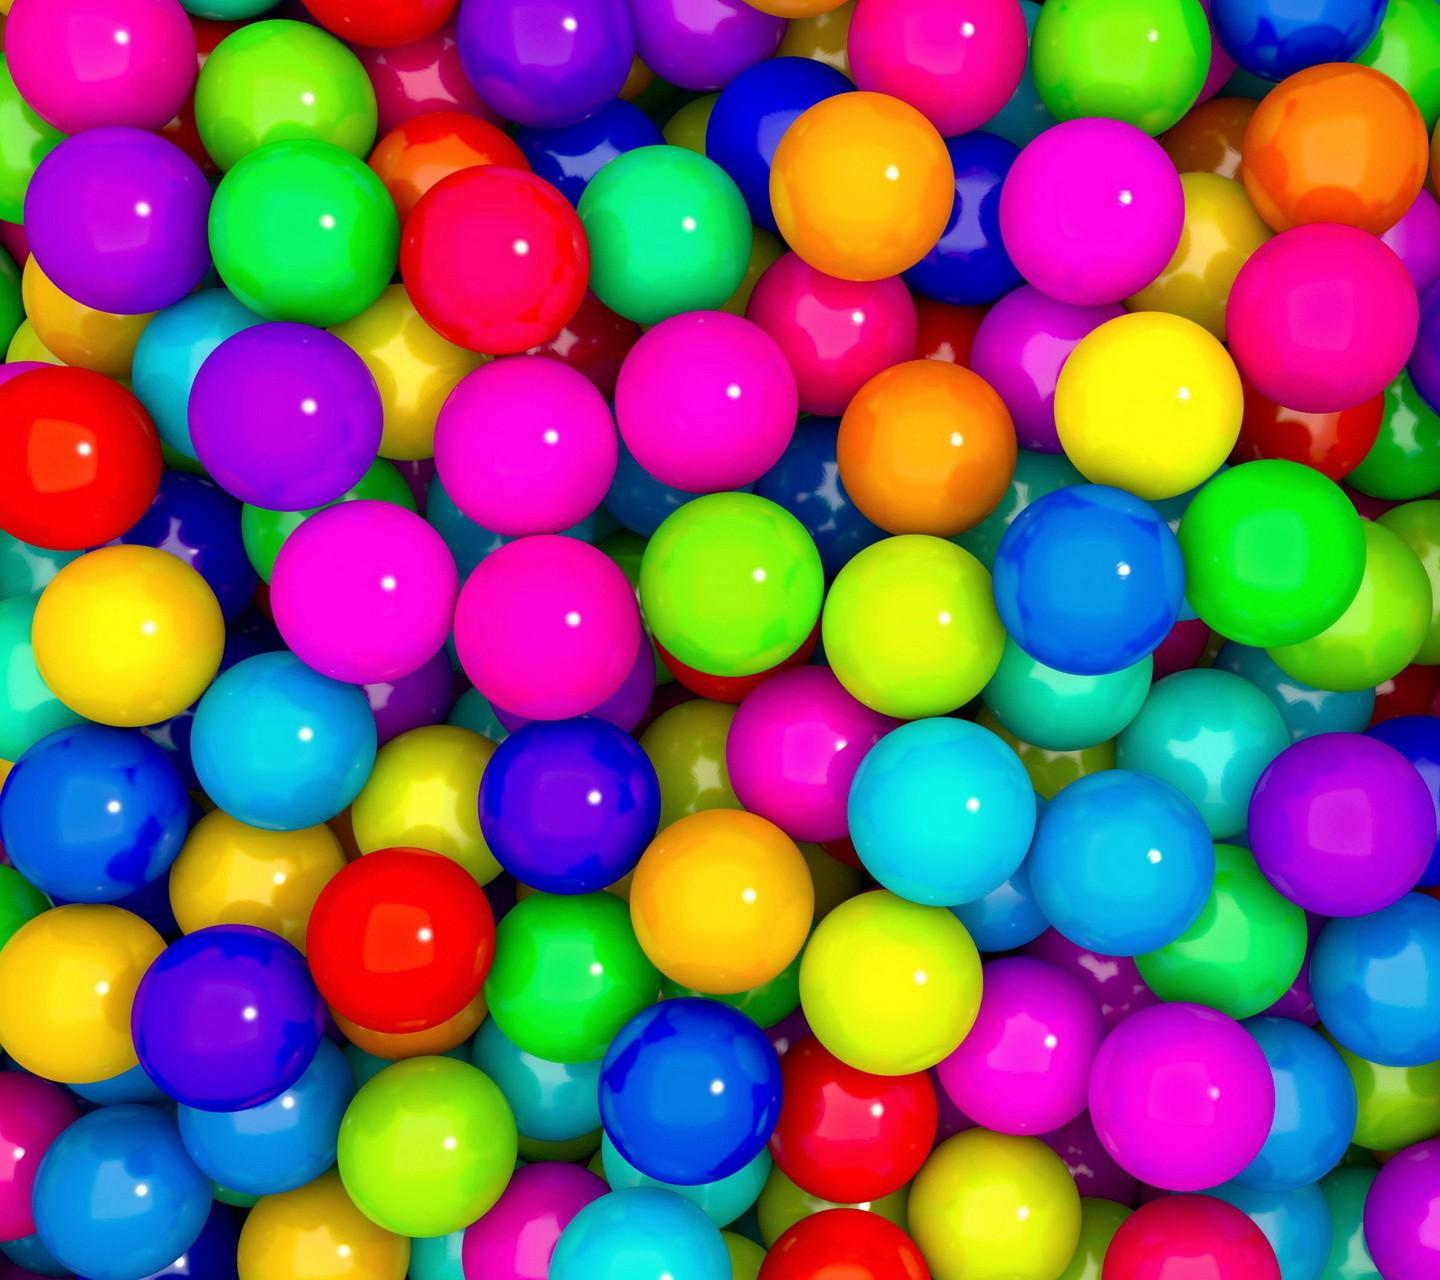 Color balls wallpaper free vector download 910 Free